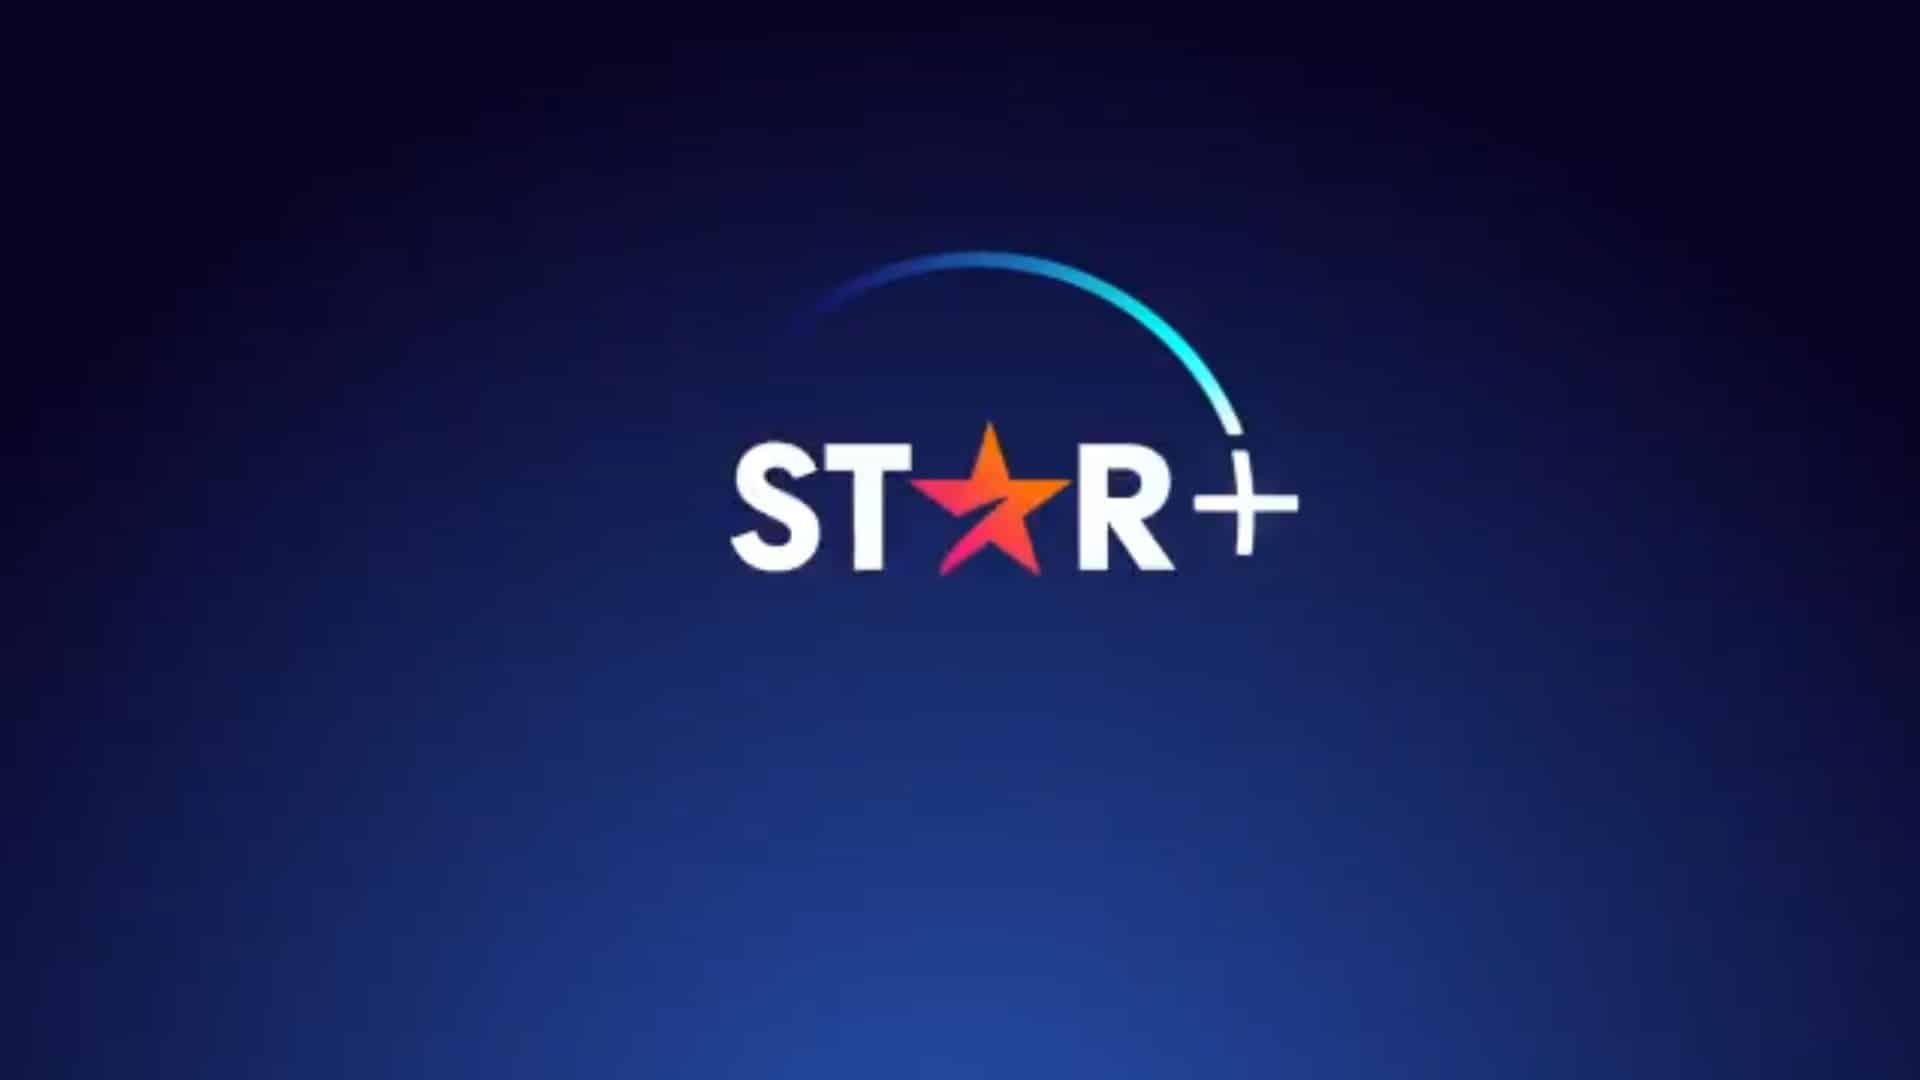 Star+, nova plataforma da Disney, já teria preço no Brasil